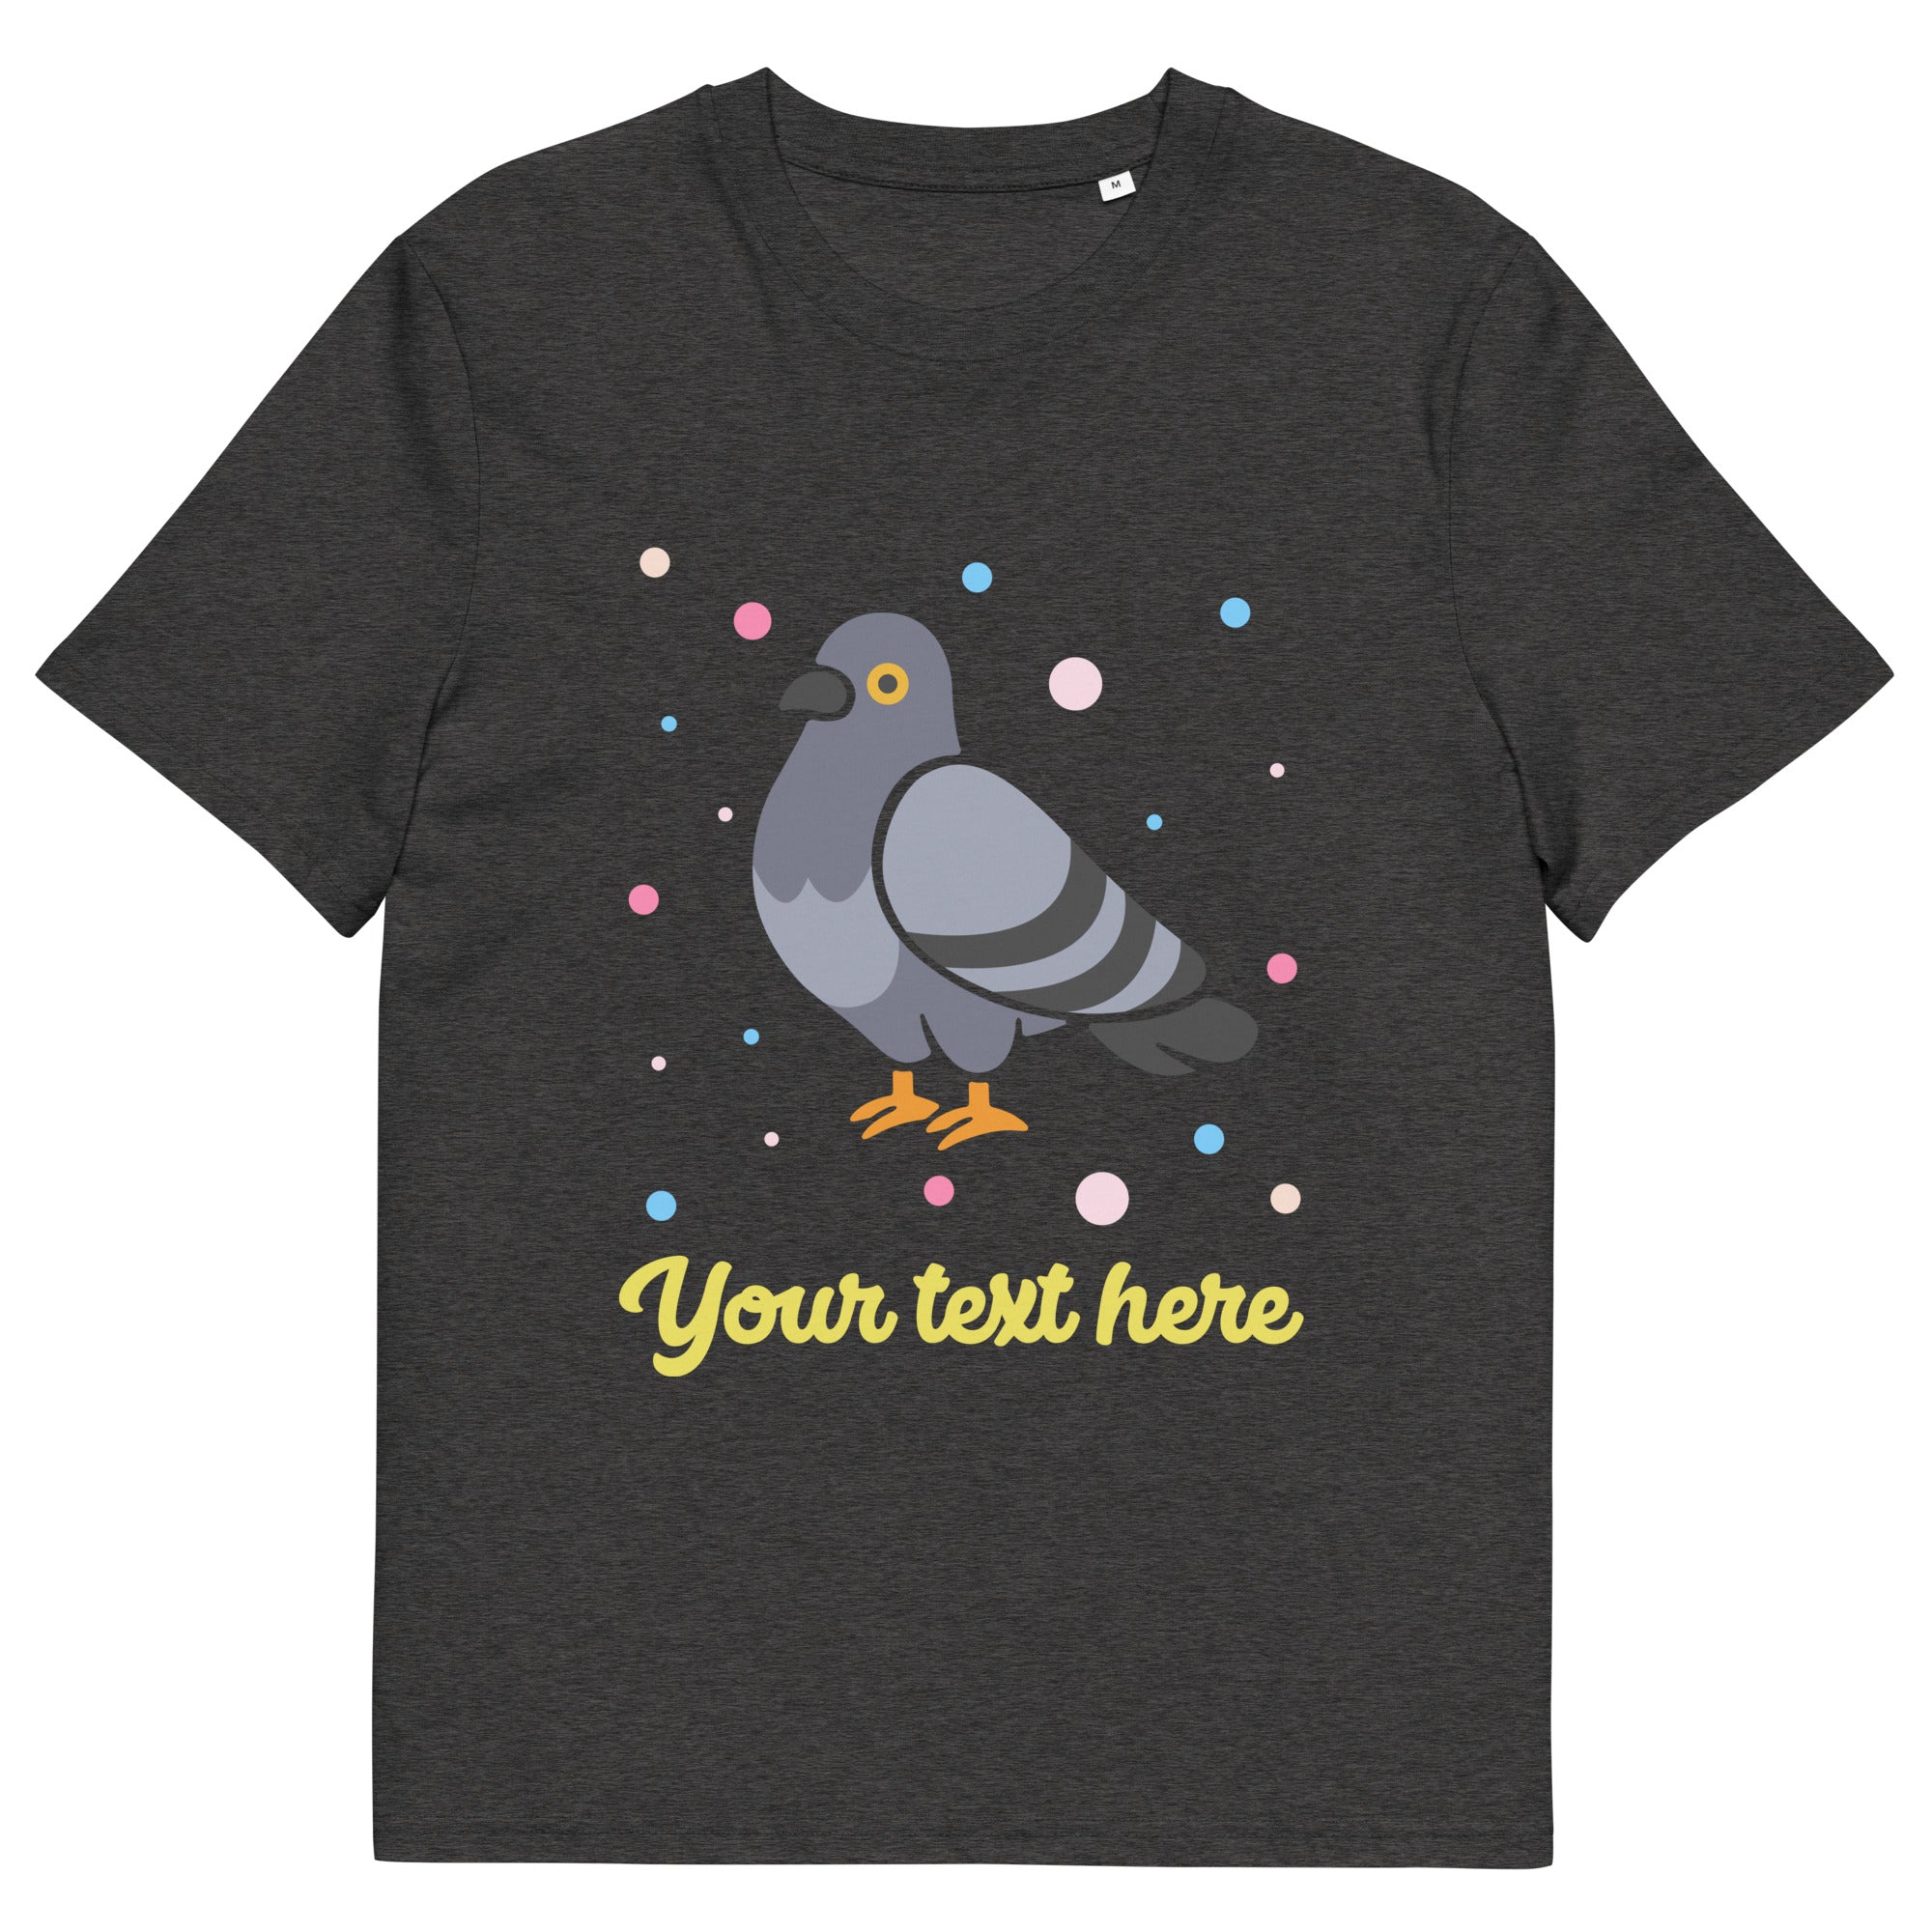 Personalised Custom Text - Organic Cotton Adults Unisex T-Shirt - London Doodles - Pigeon - Dark Grey